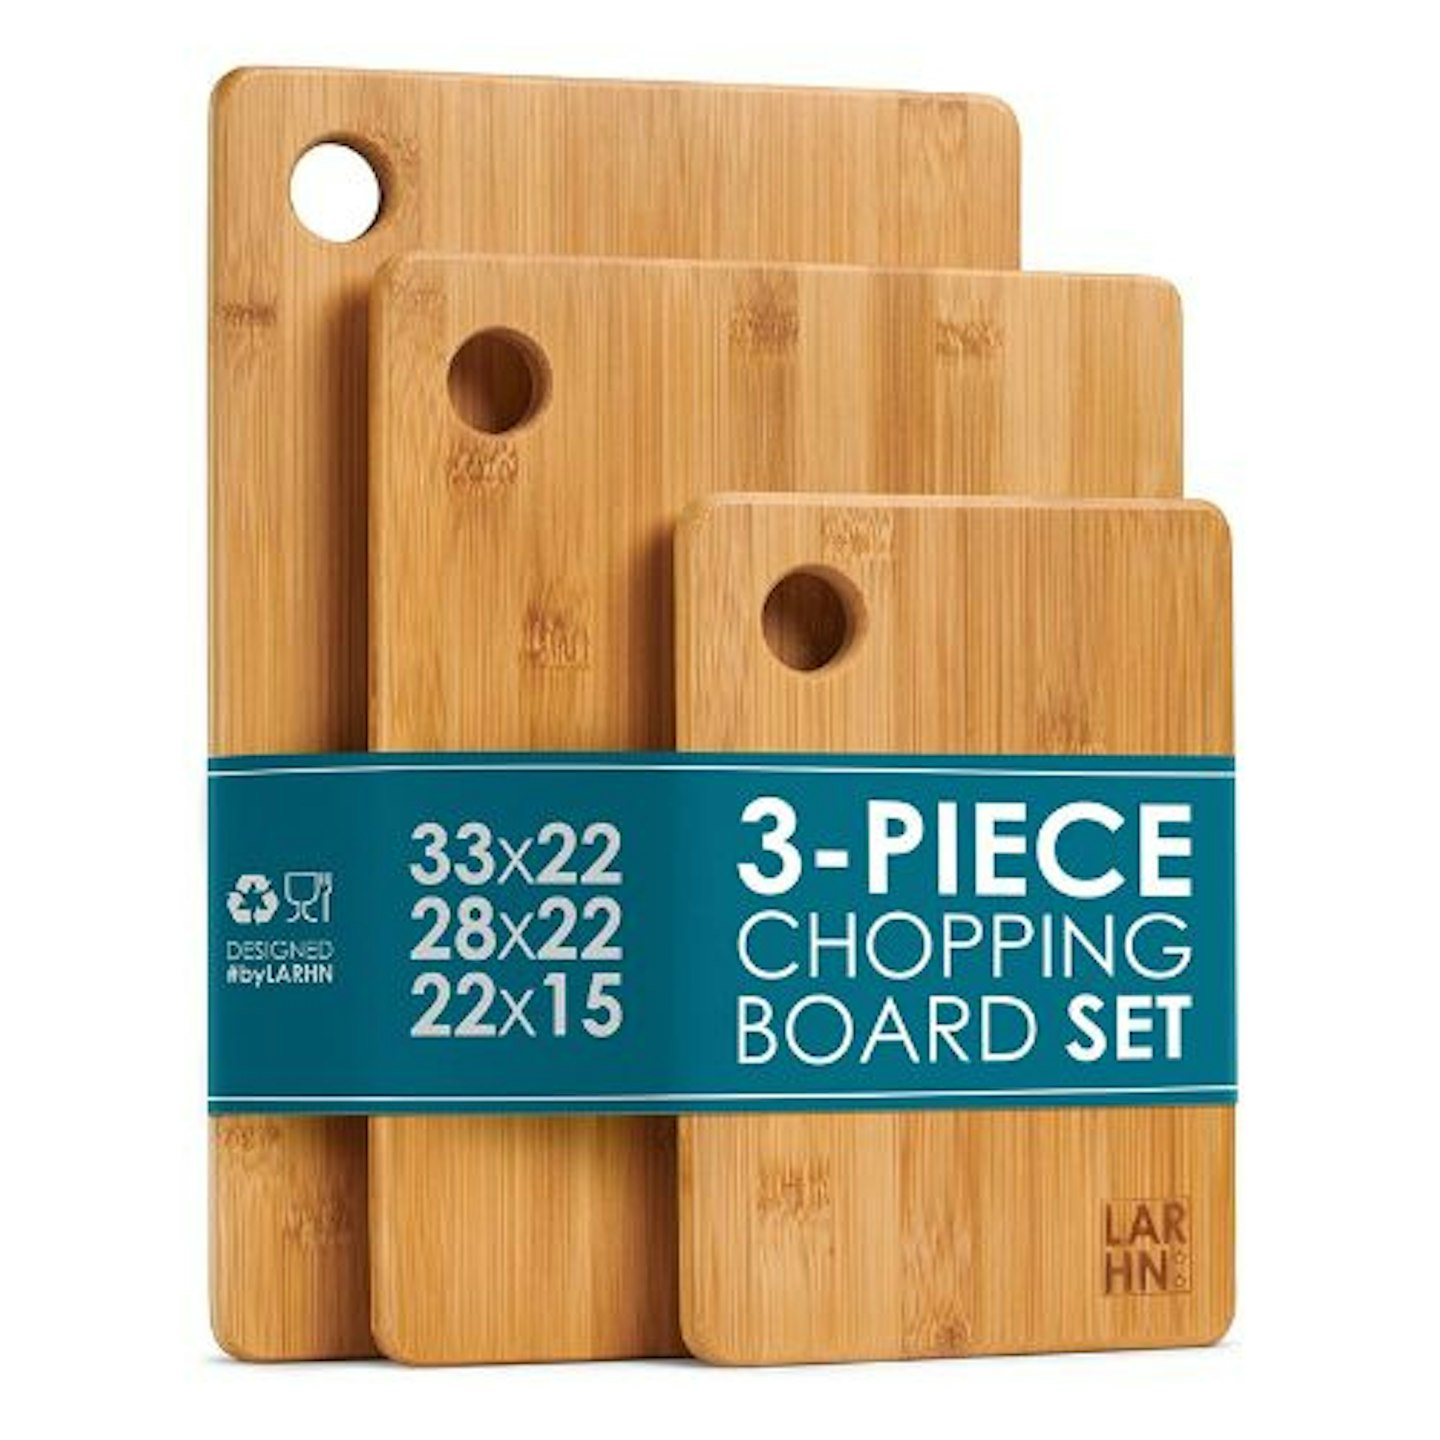 LARHN Premium Bamboo Wooden Chopping Boards (Set of 3)